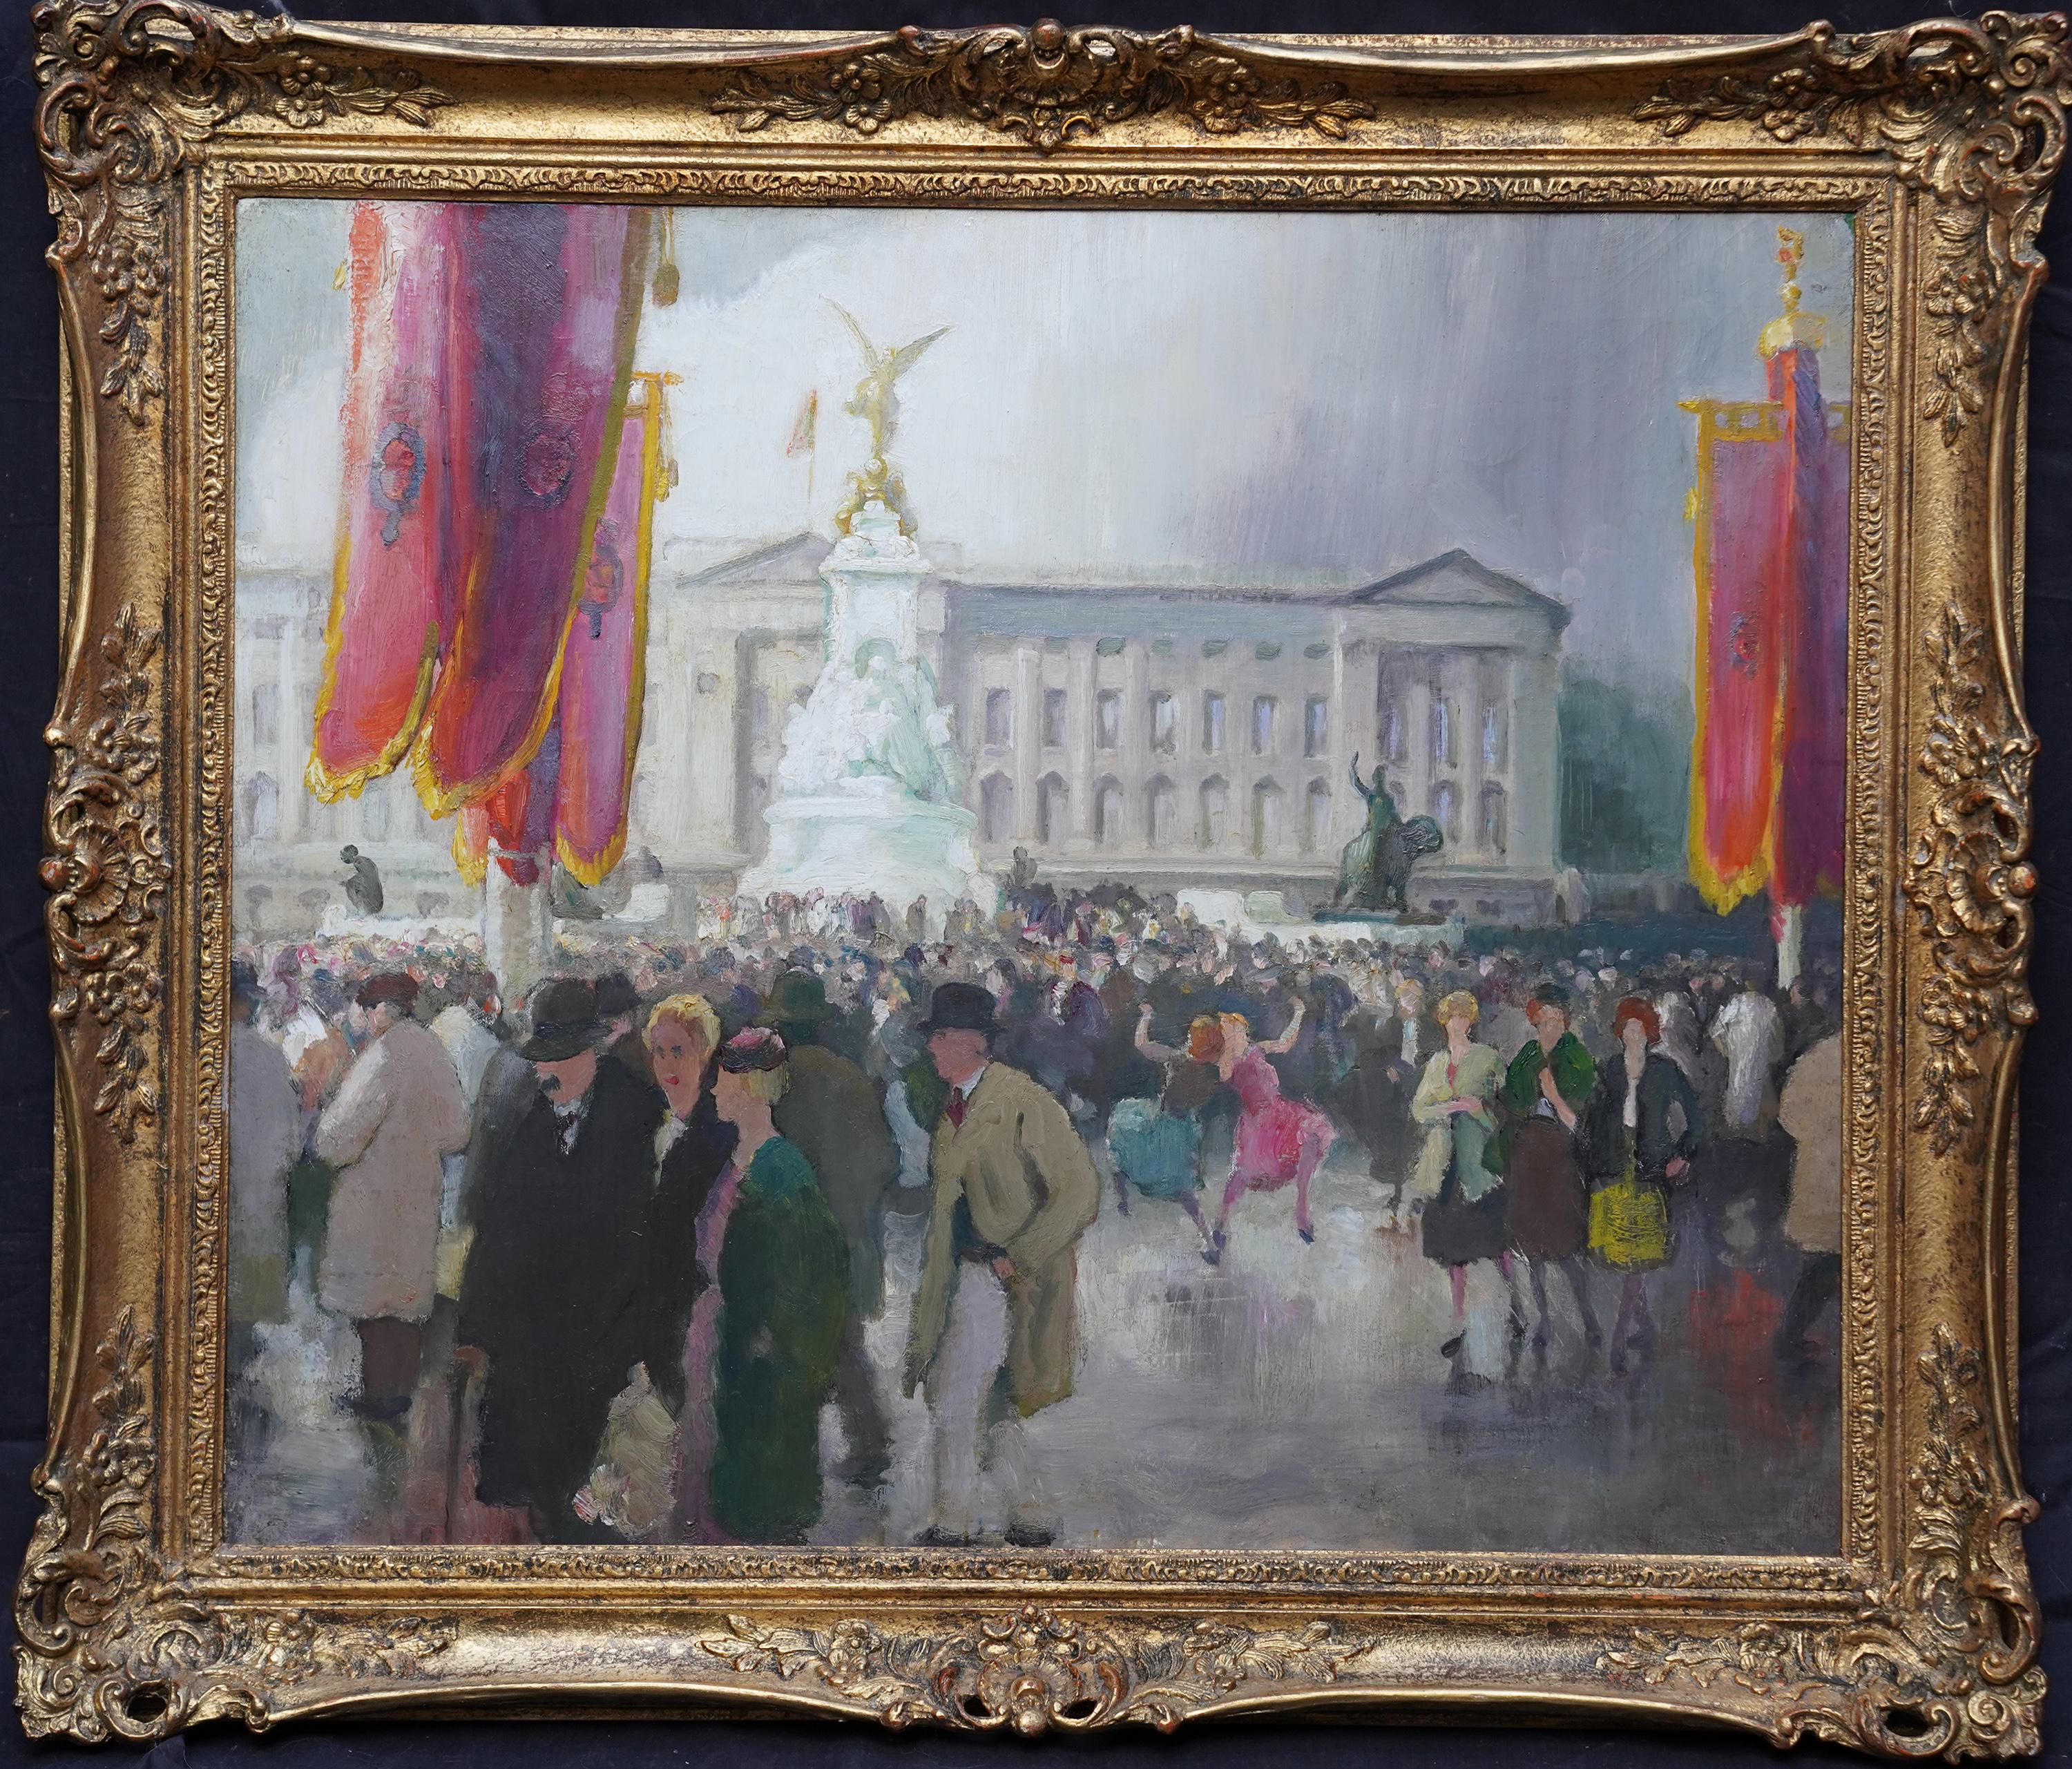 Festivities Buckingham Palace - British 1950's figurative landscape oil painting